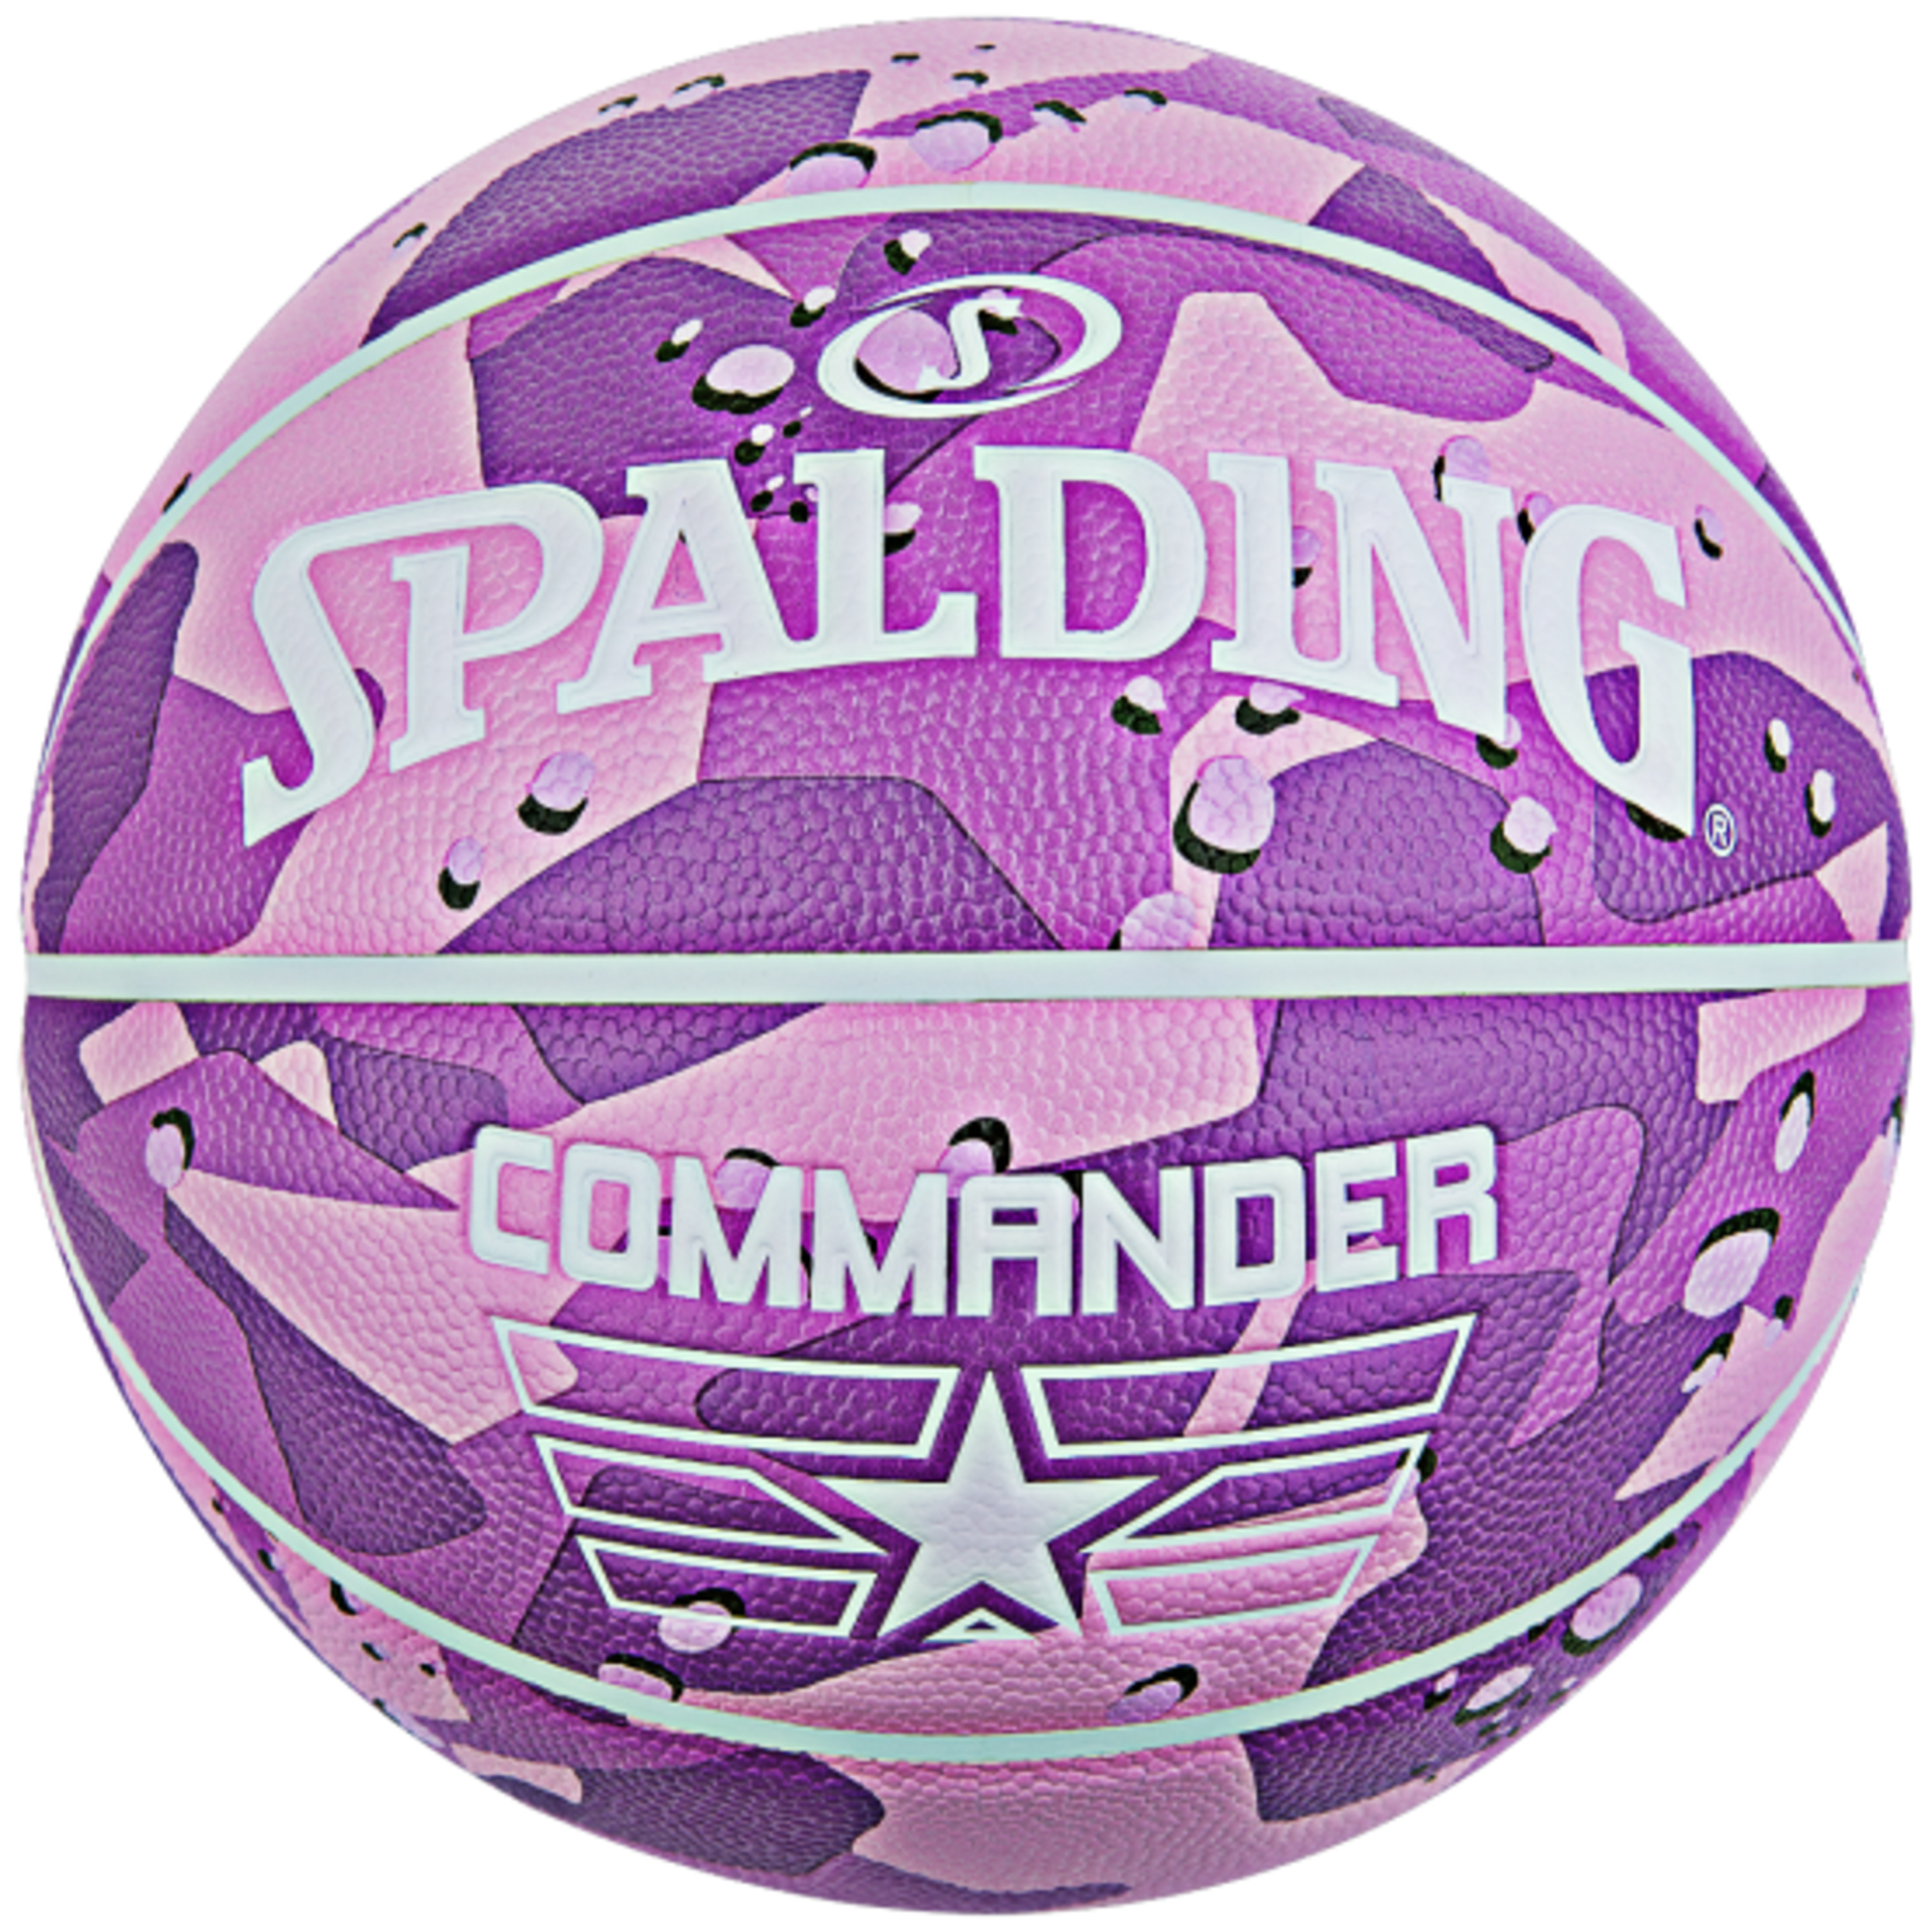 Spalding Commander Solid Purple Sz6 Basquetebol - purpura - 